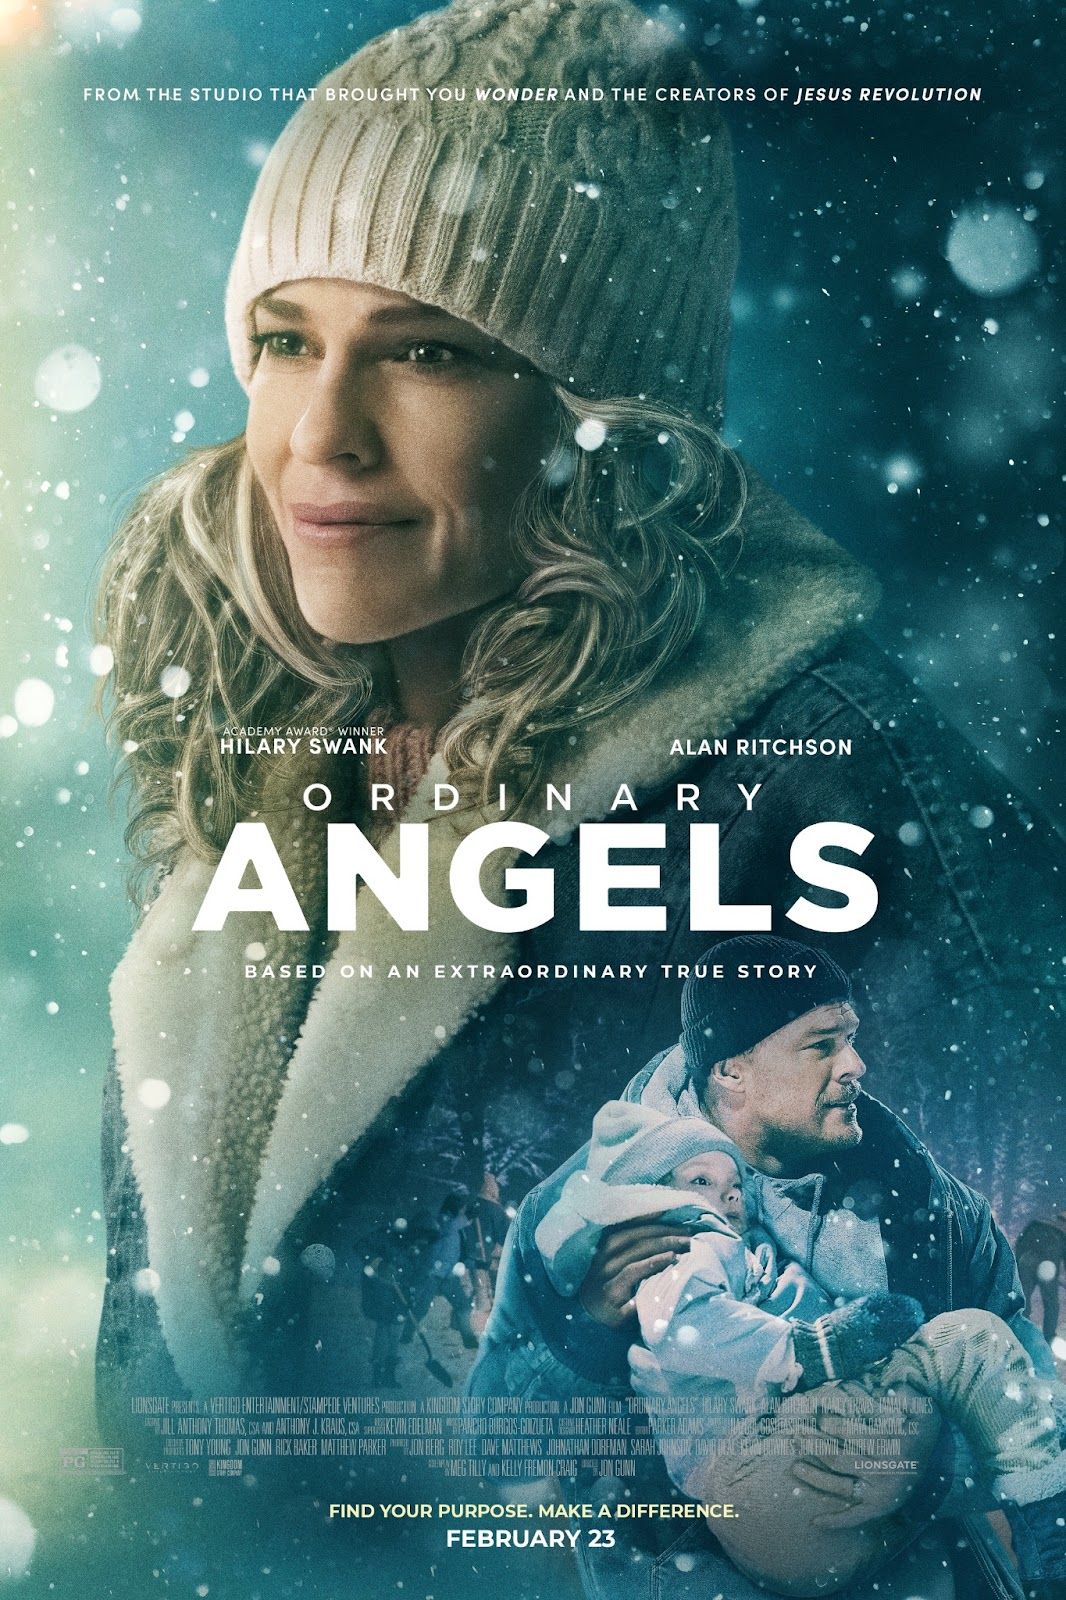 Cartaz do filme Ordinary Angels com Hilary Swank e Alan Ritchman